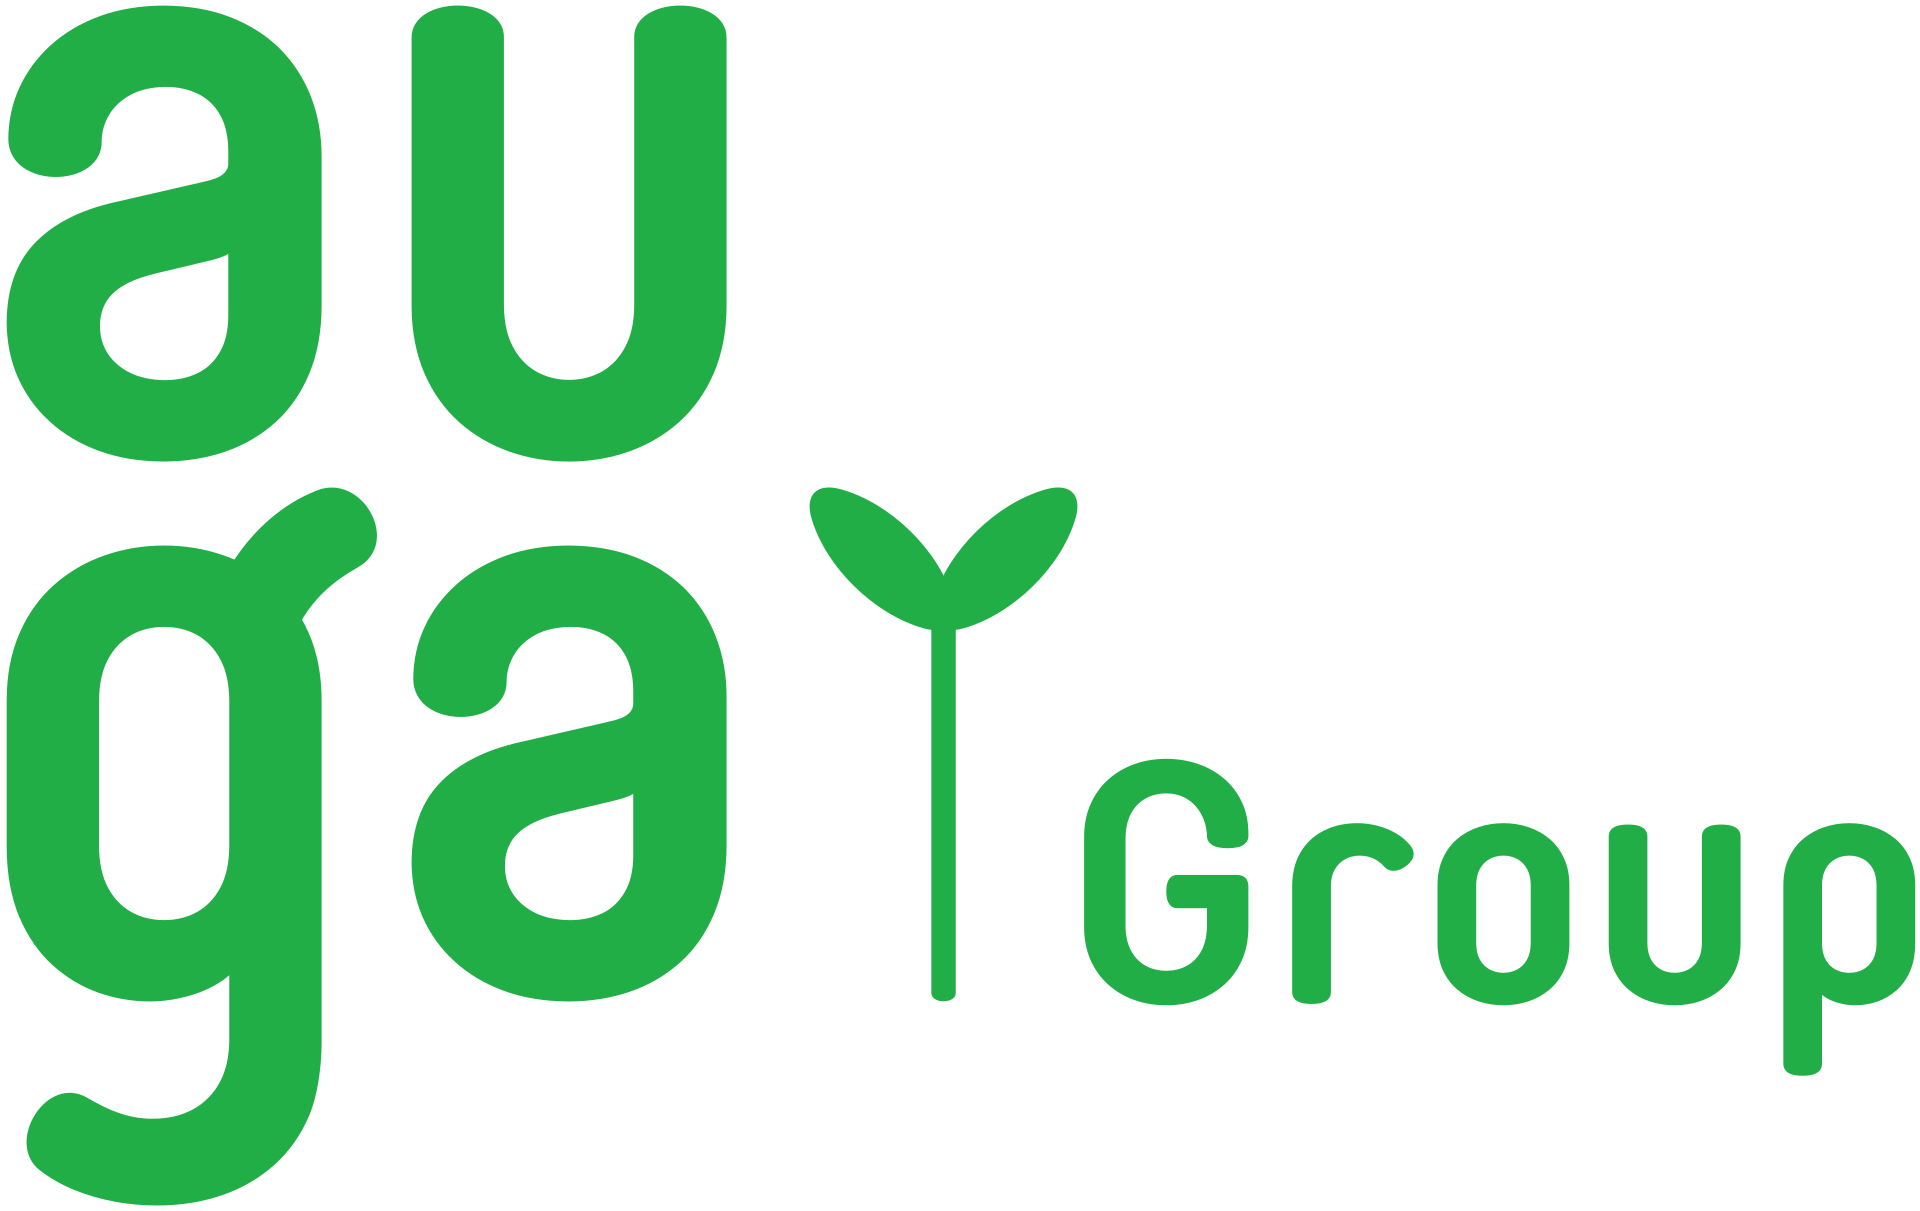 Auga Group